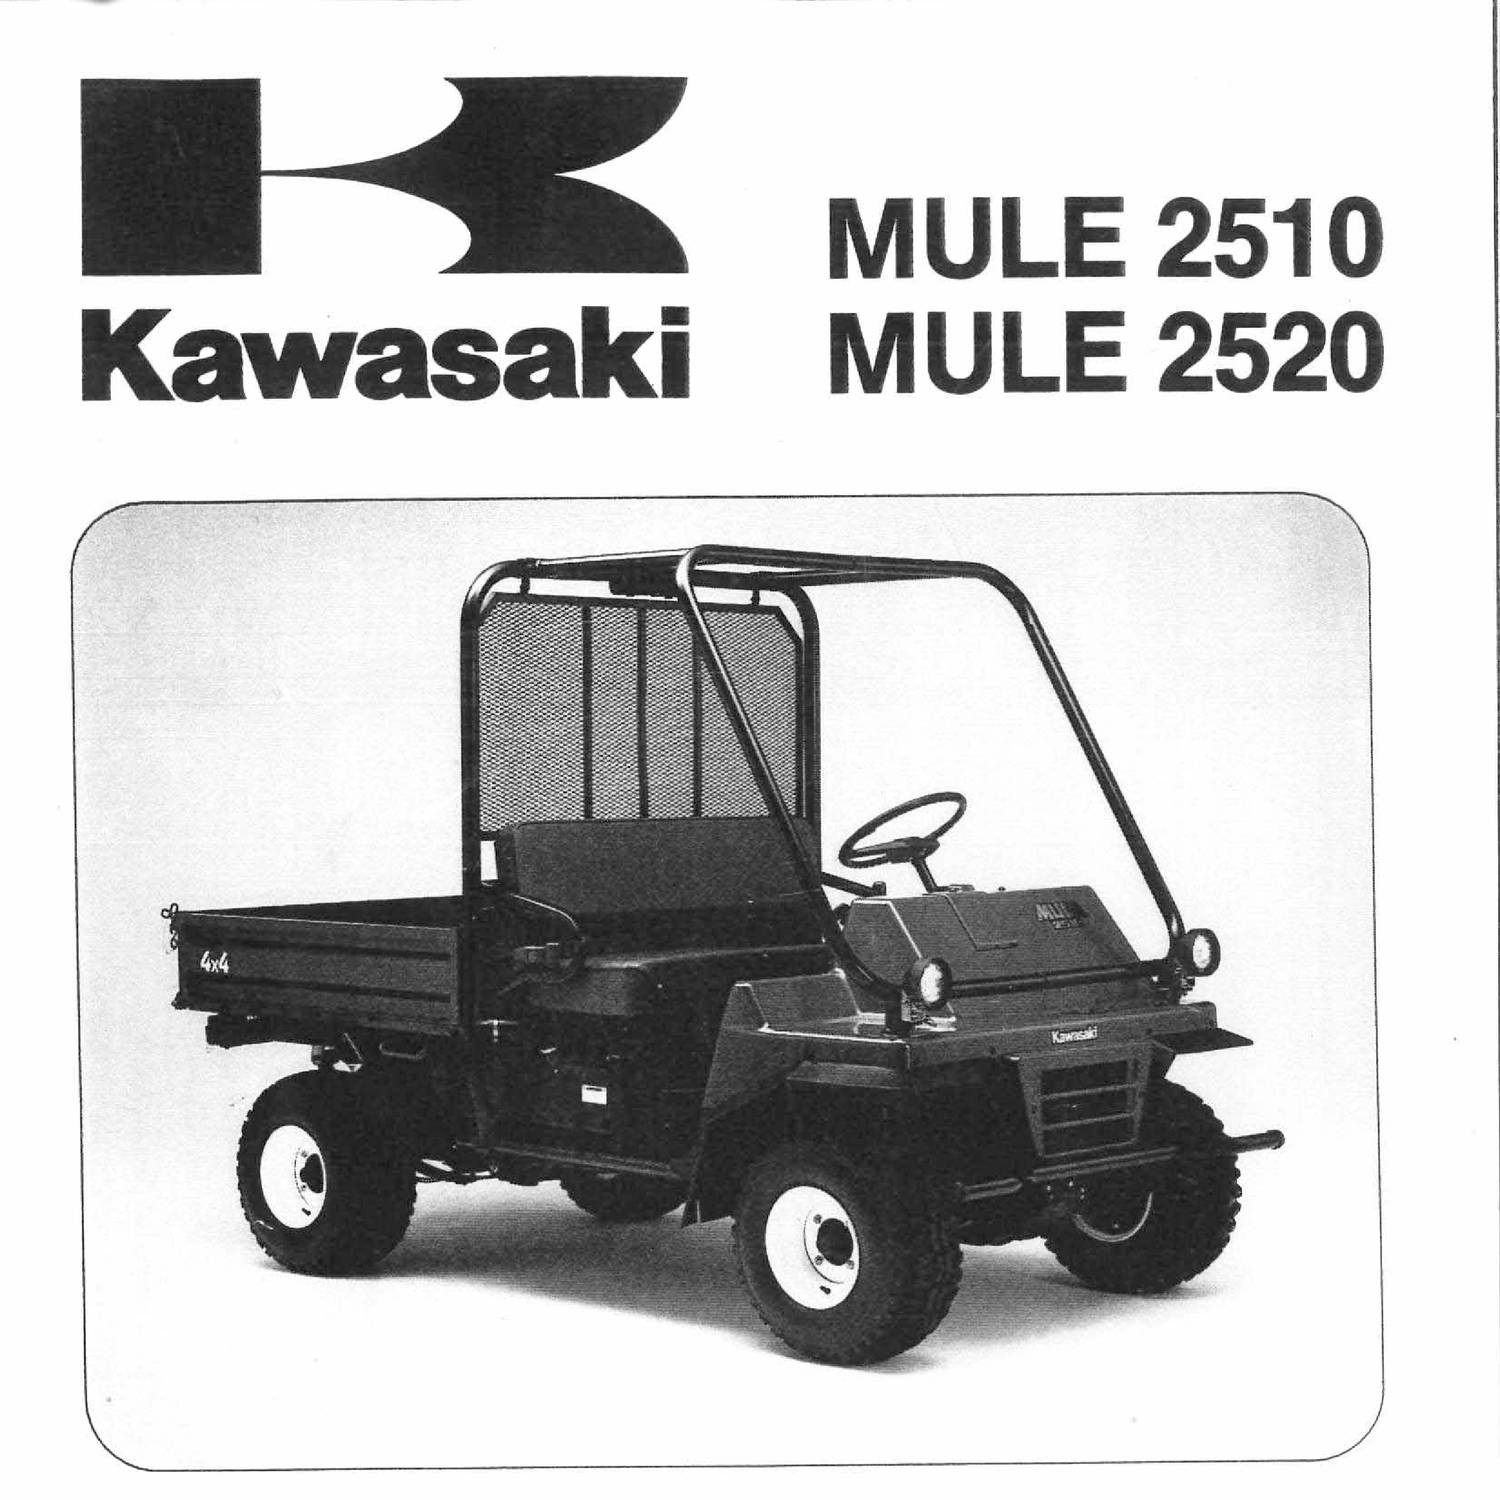 Kawasaki Mule 2500 2510 2520 1998 1999 2000 service manual on CD